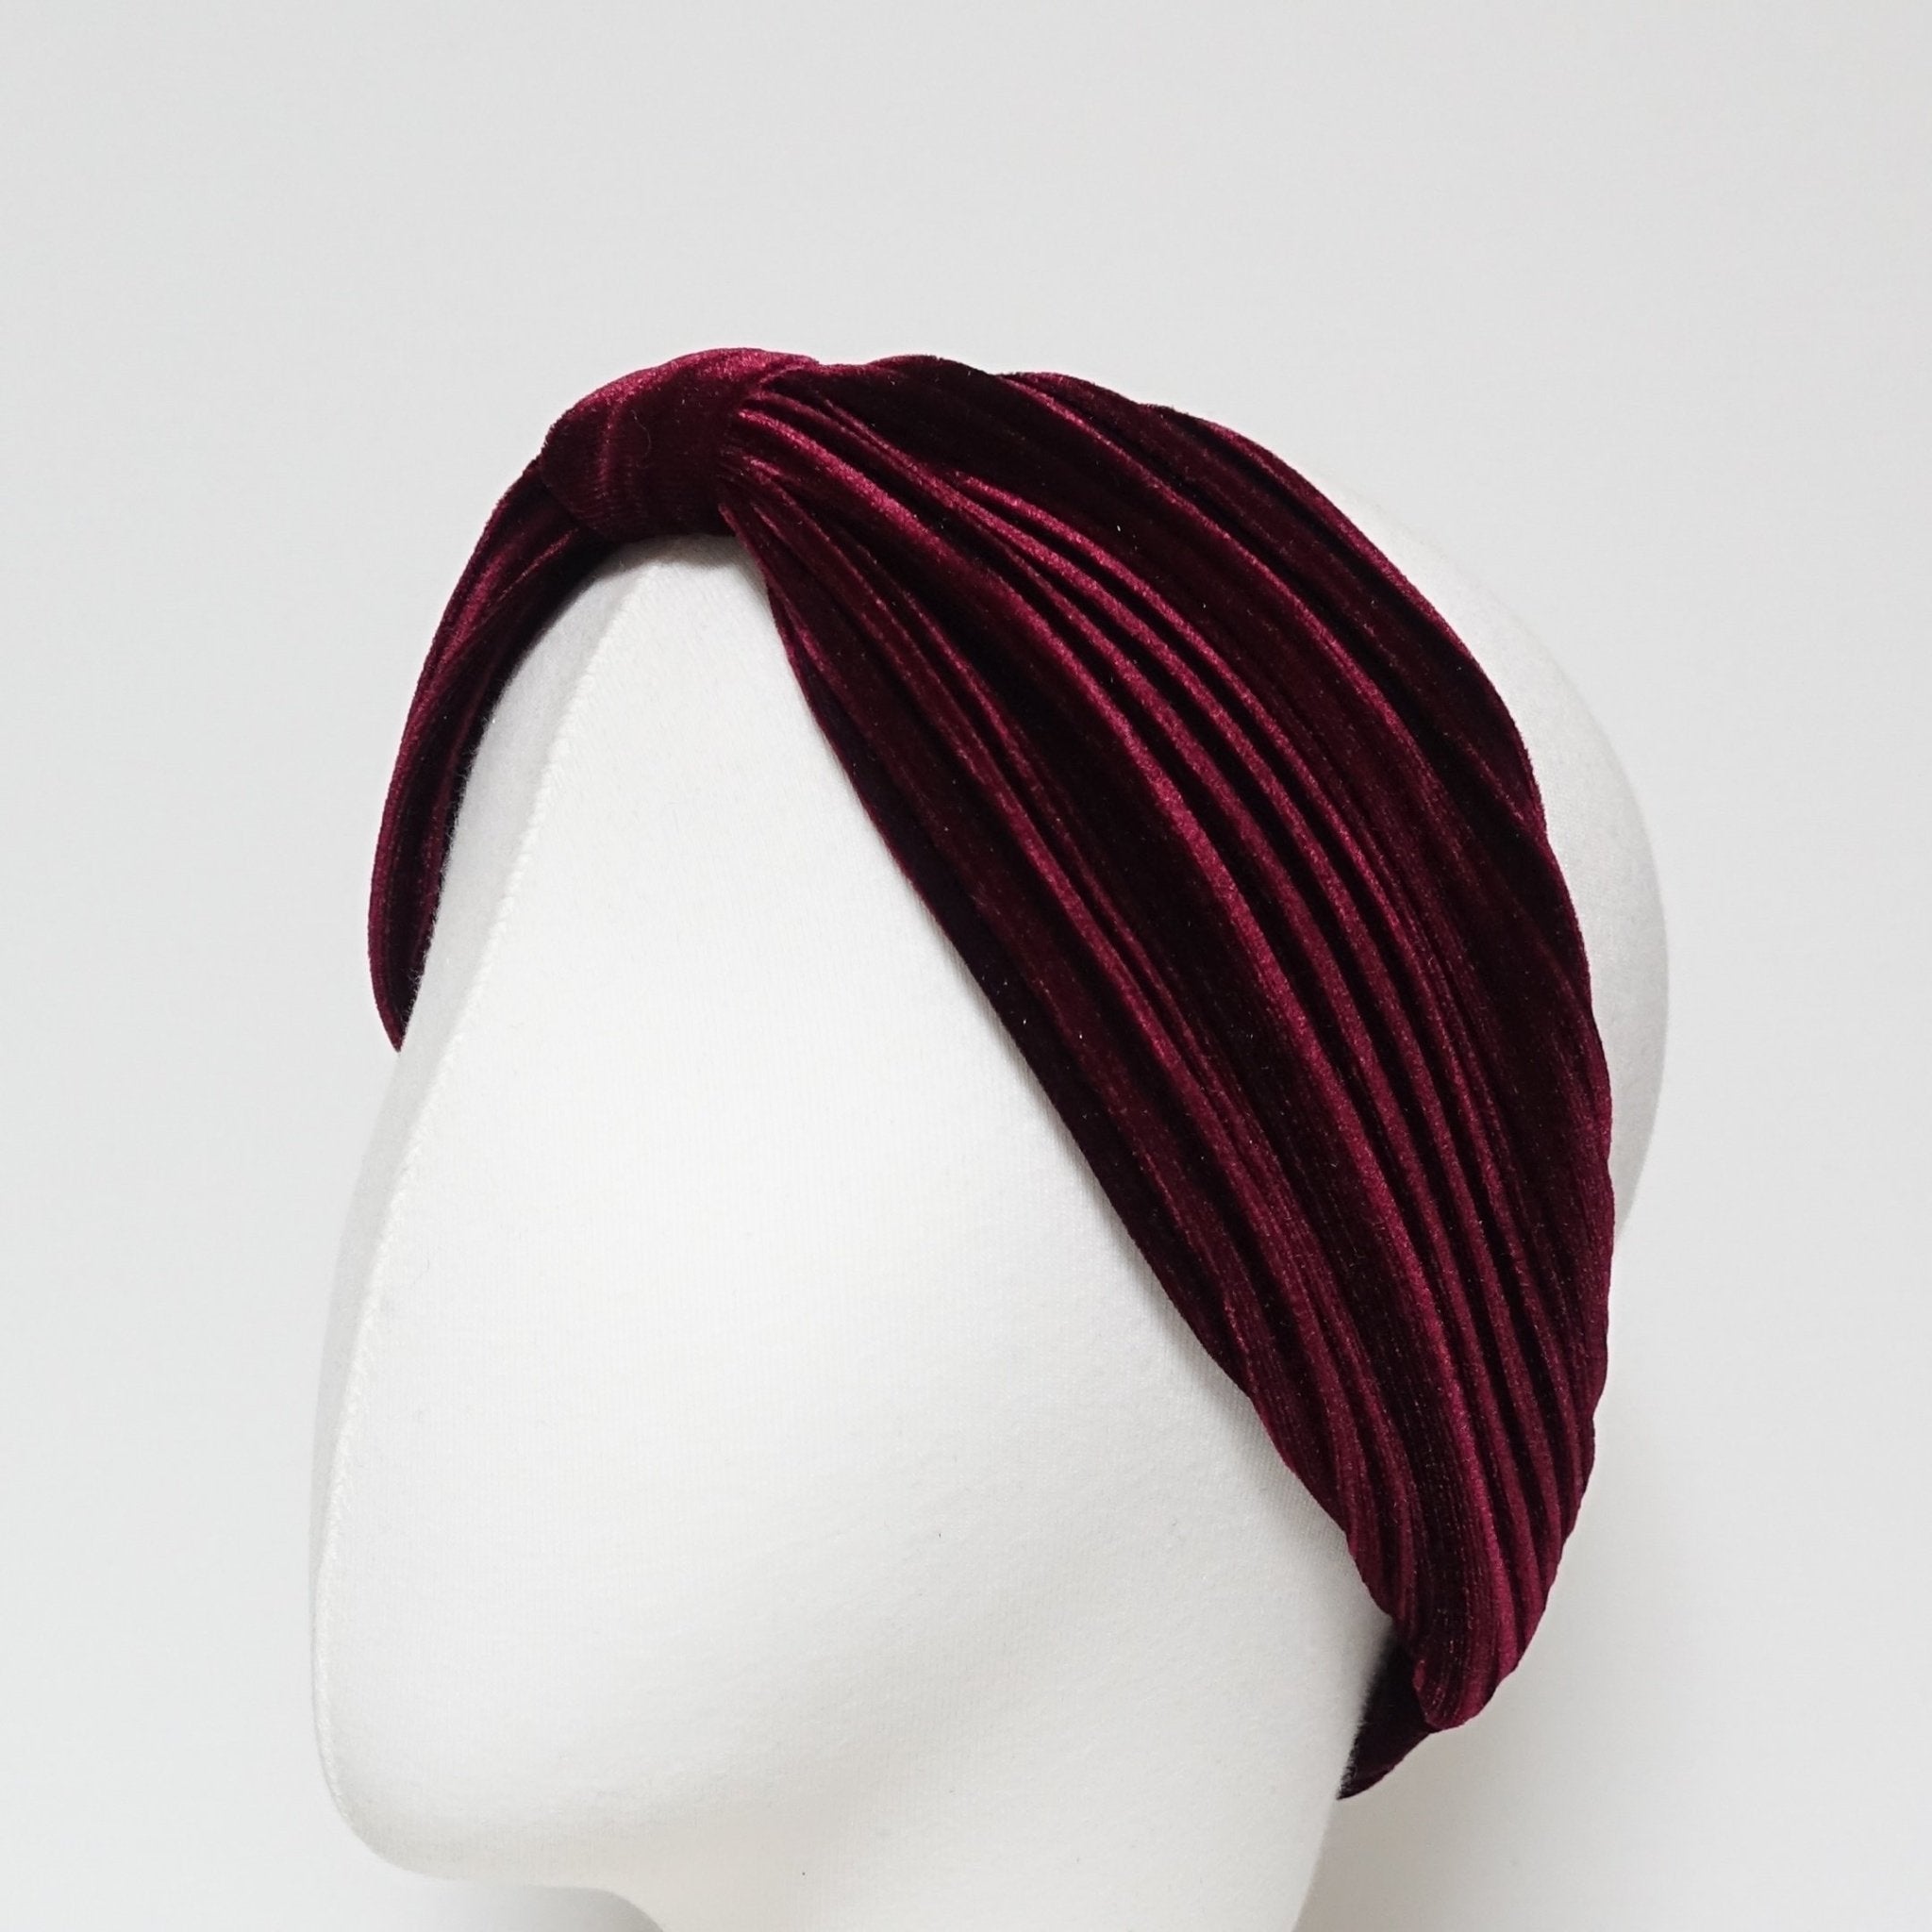 veryshine.com hairband/headband Burgundy Pleated Velvet Hair Turban Fashion Headband Women Hair Accessories